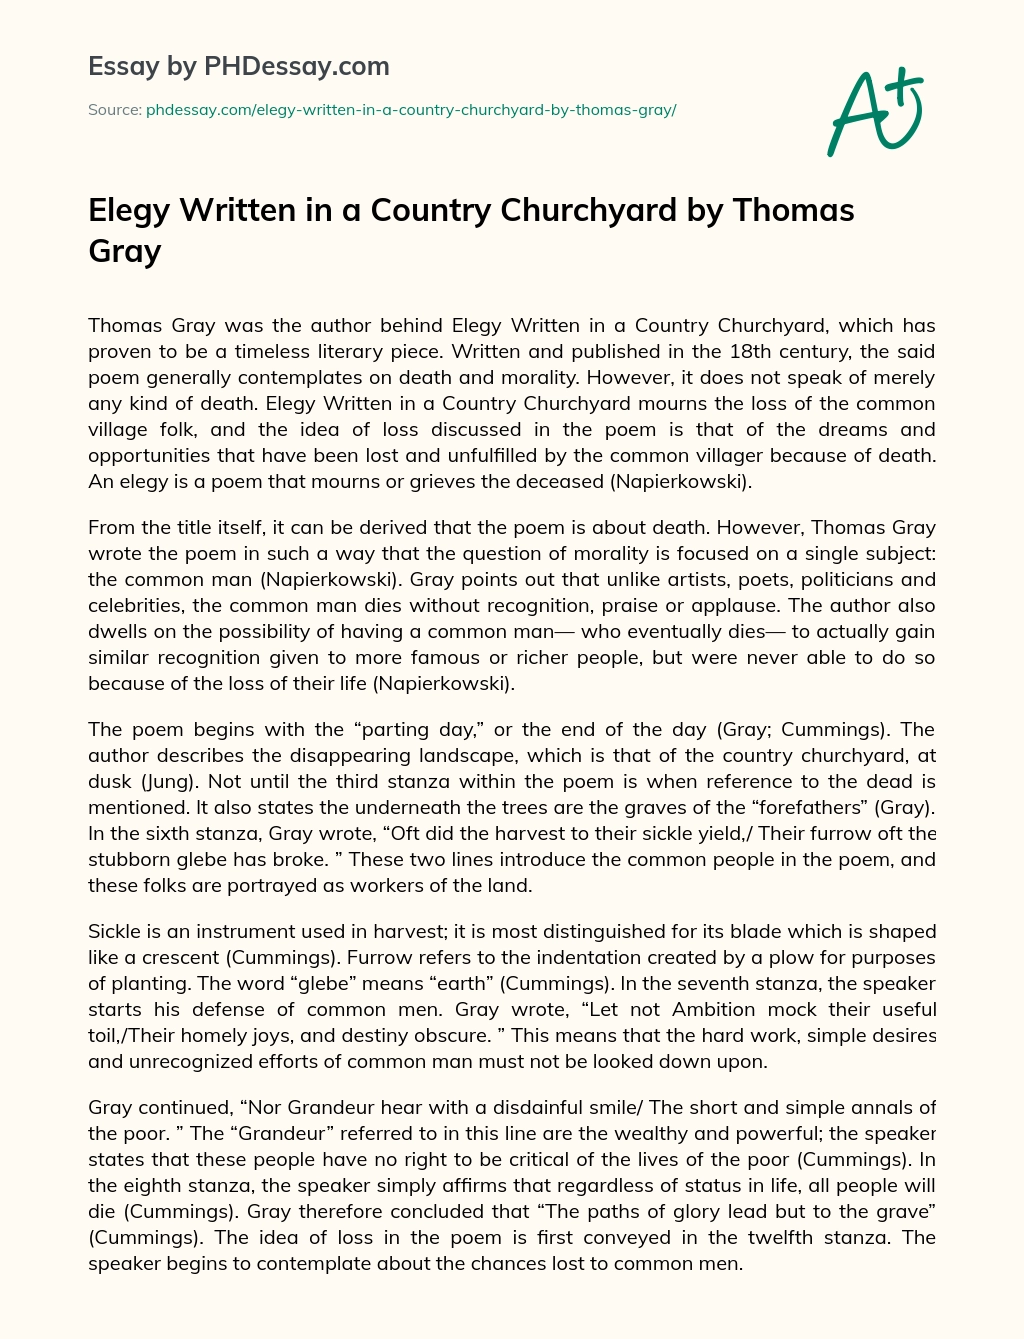 Elegy Written in a Country Churchyard by Thomas Gray essay